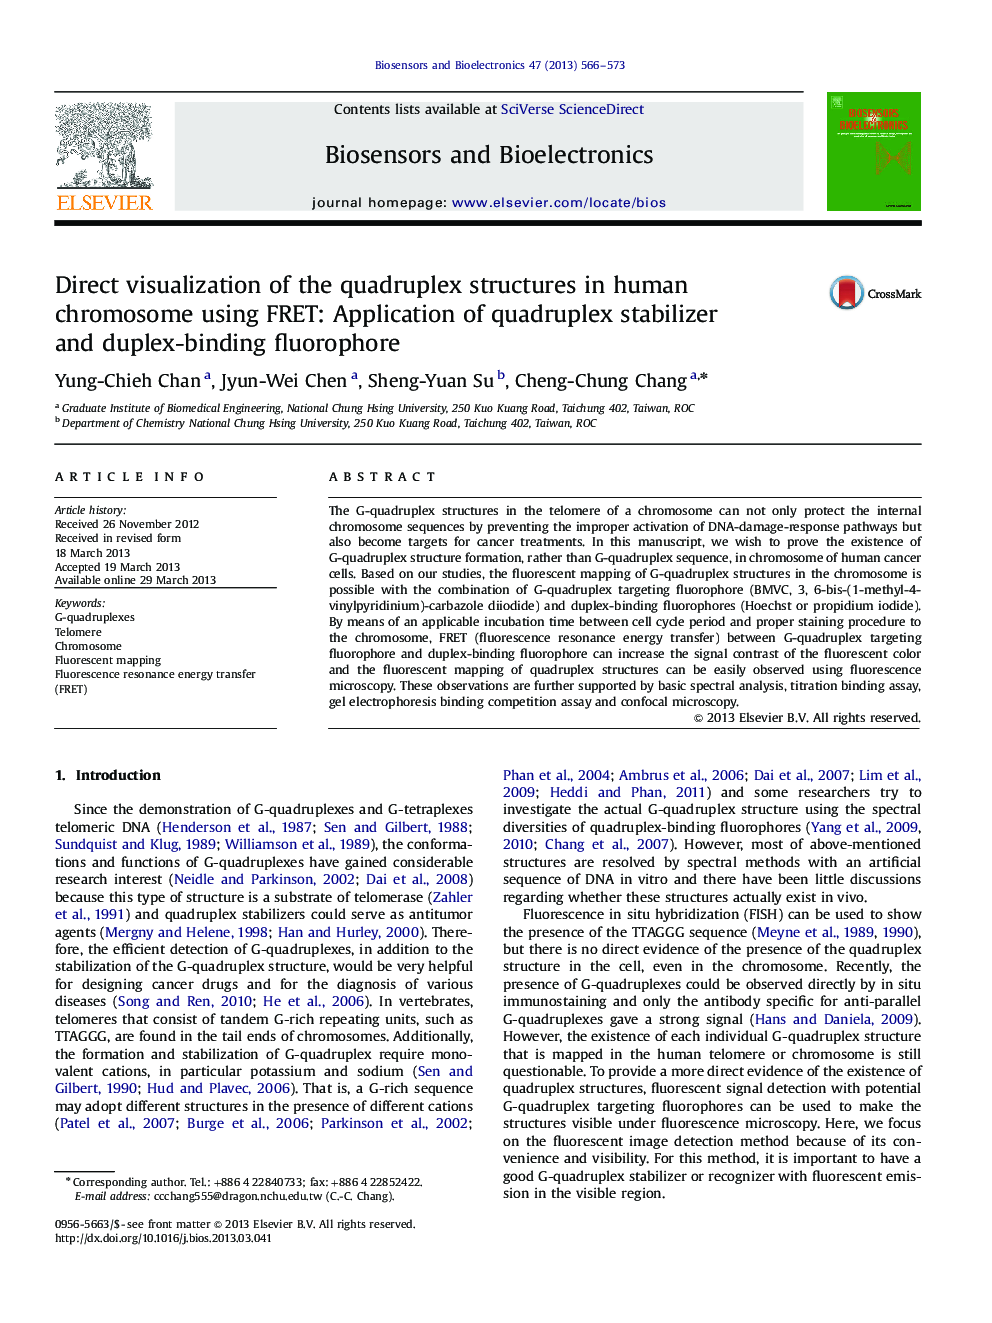 Direct visualization of the quadruplex structures in human chromosome using FRET: Application of quadruplex stabilizer and duplex-binding fluorophore